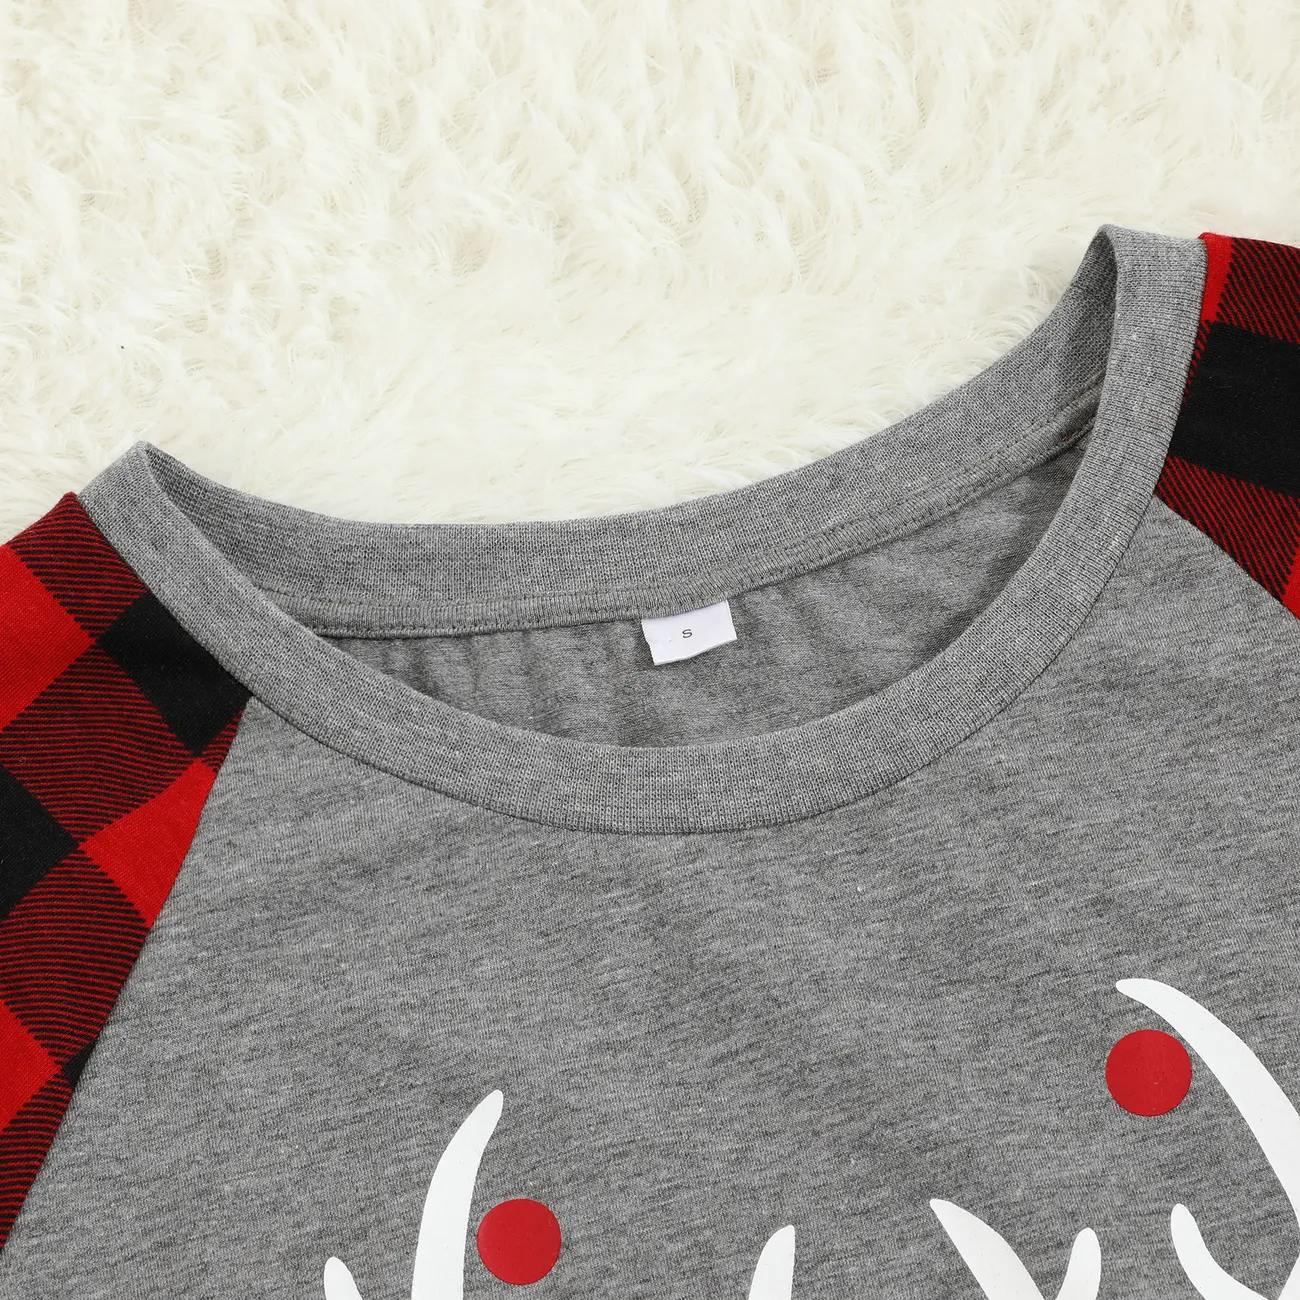 Merry Christmas Antler Letter Print Plaid Design Family Matching Pajamas Sets (Flame Resistant) Grey big image 1